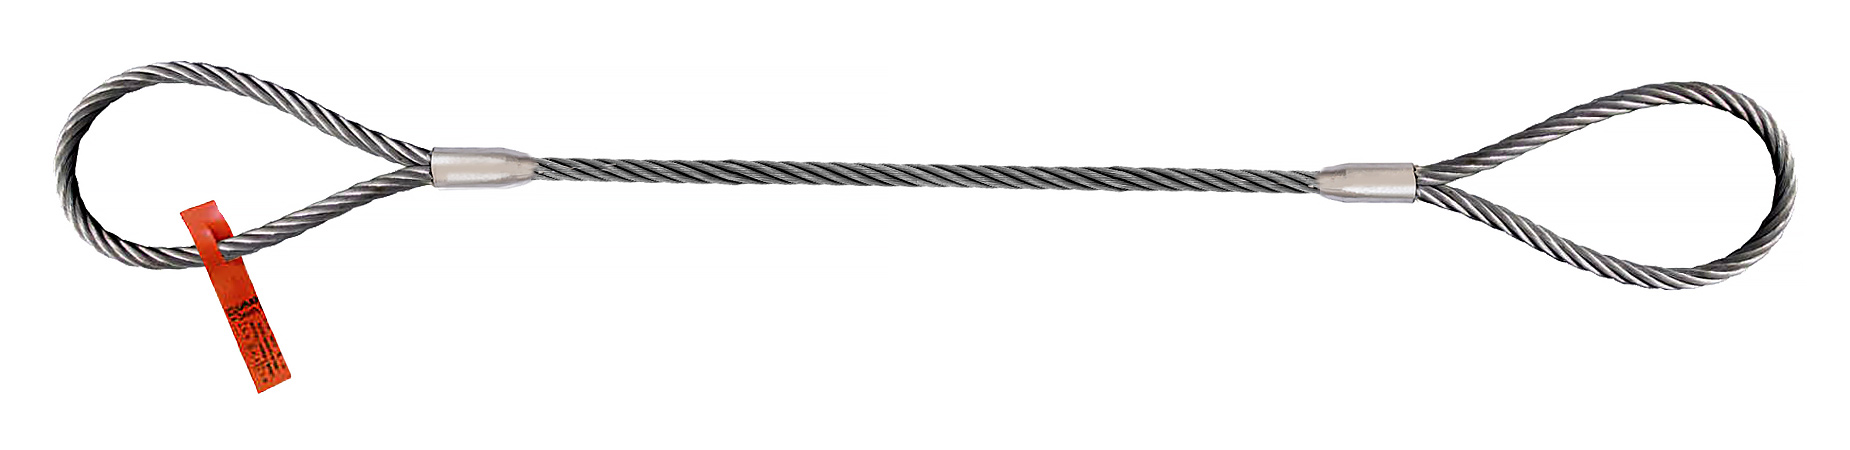 8 Length 13800 lb Liftall 1EZEEX8 Sling Wire Rope Vertical 